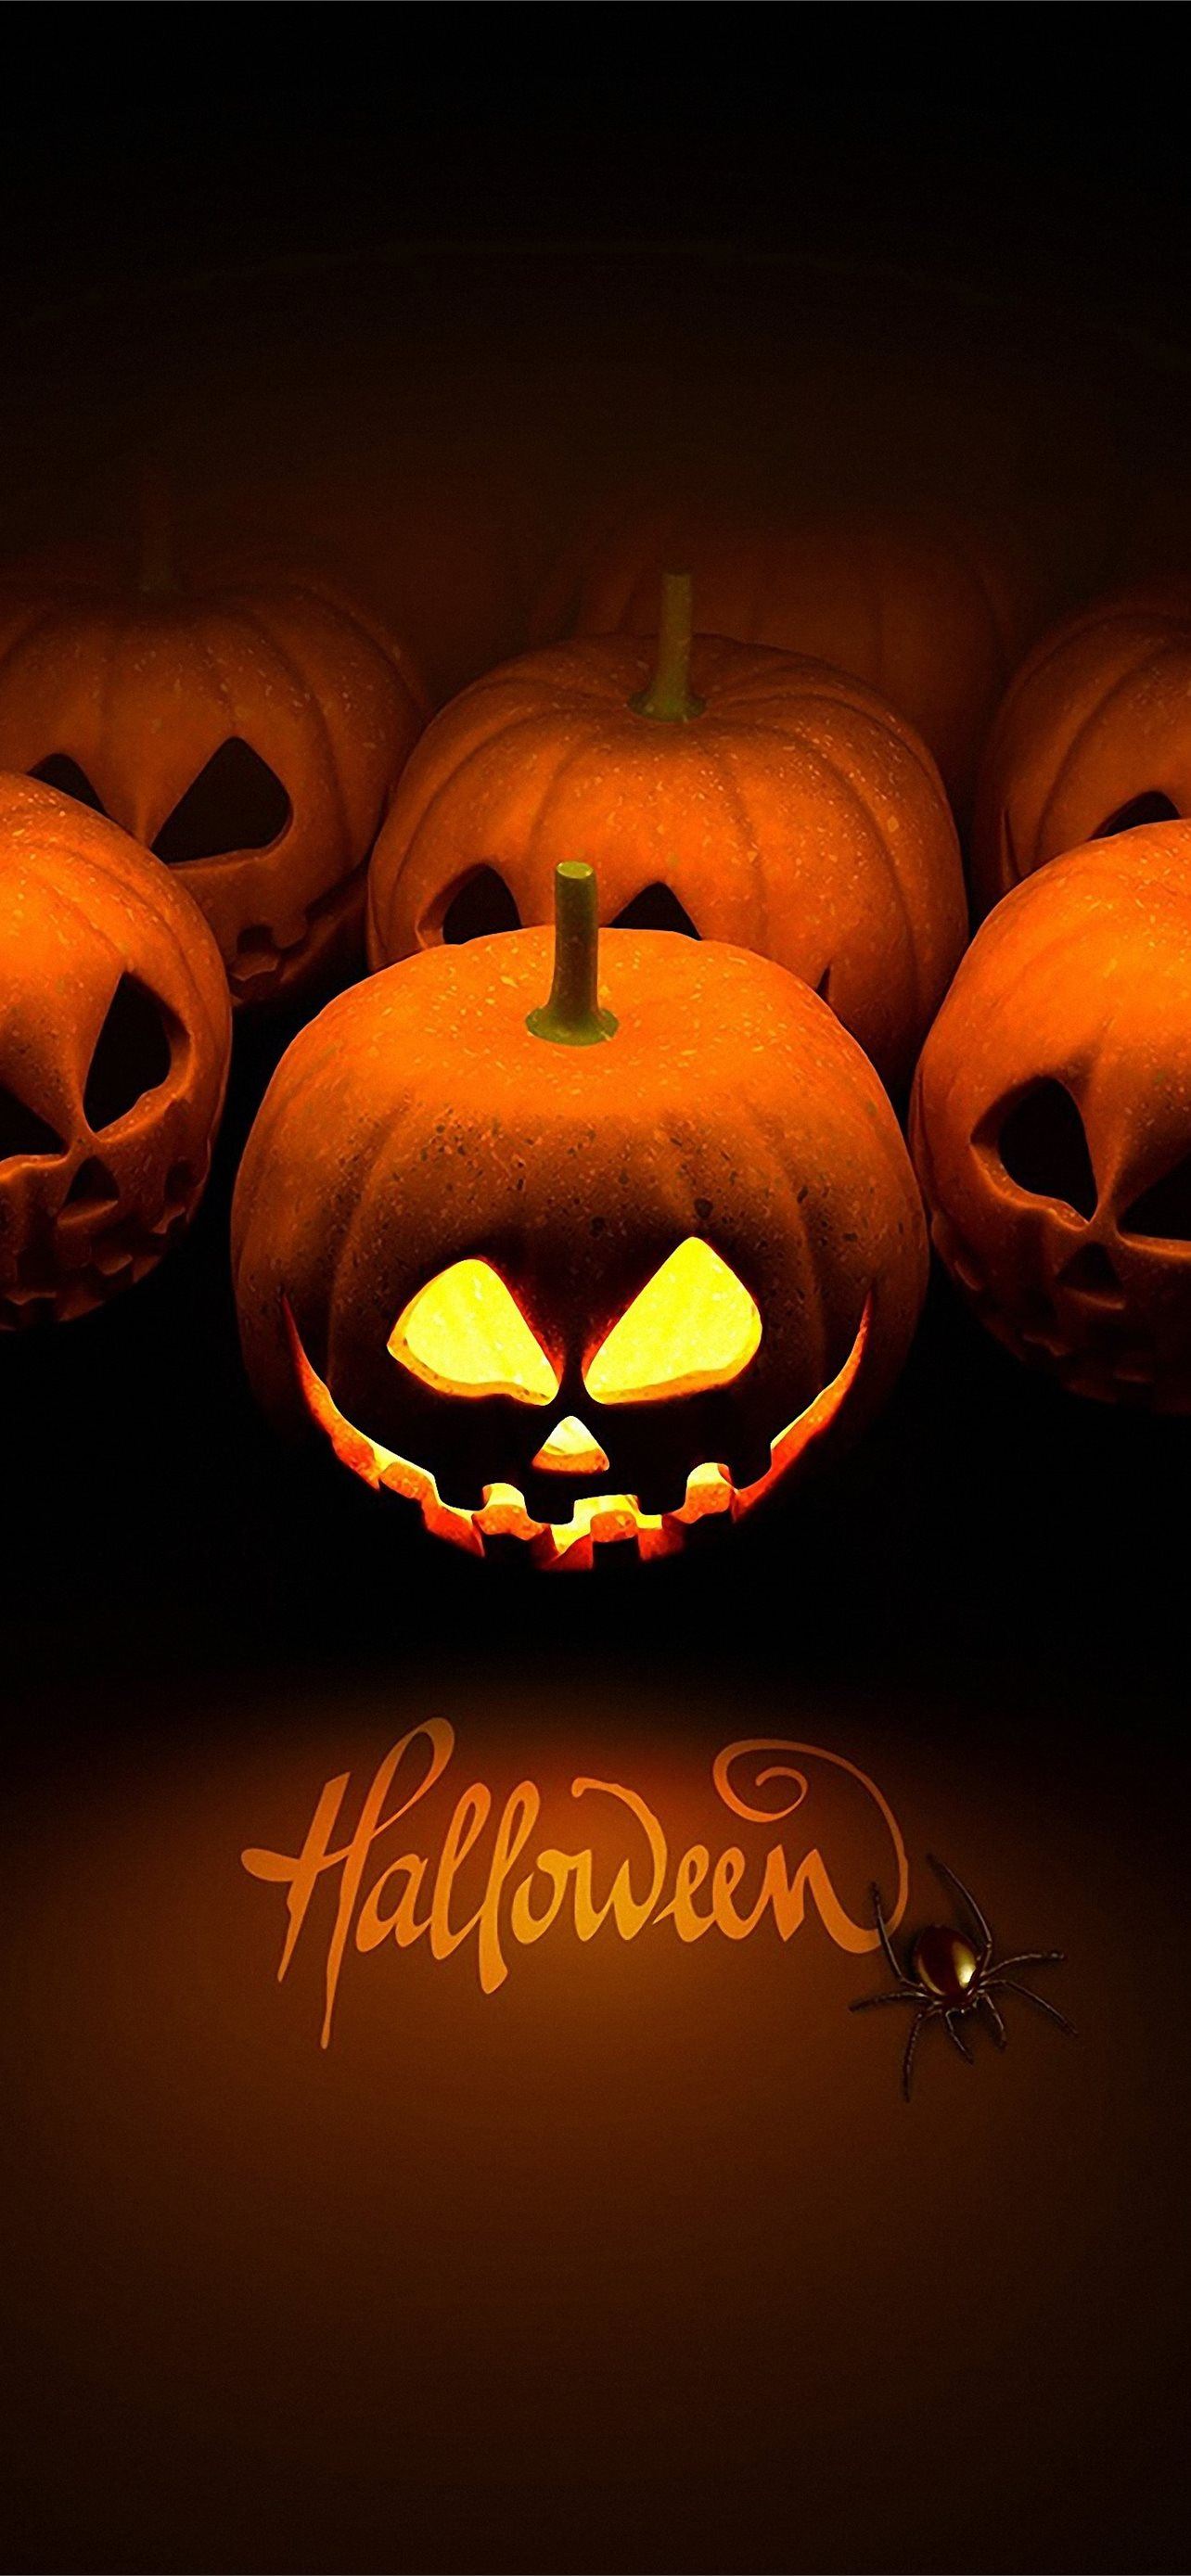 Free HD Halloween Pumpkin Galaxy S8 Halloween iPhone Wallpaper Free Download